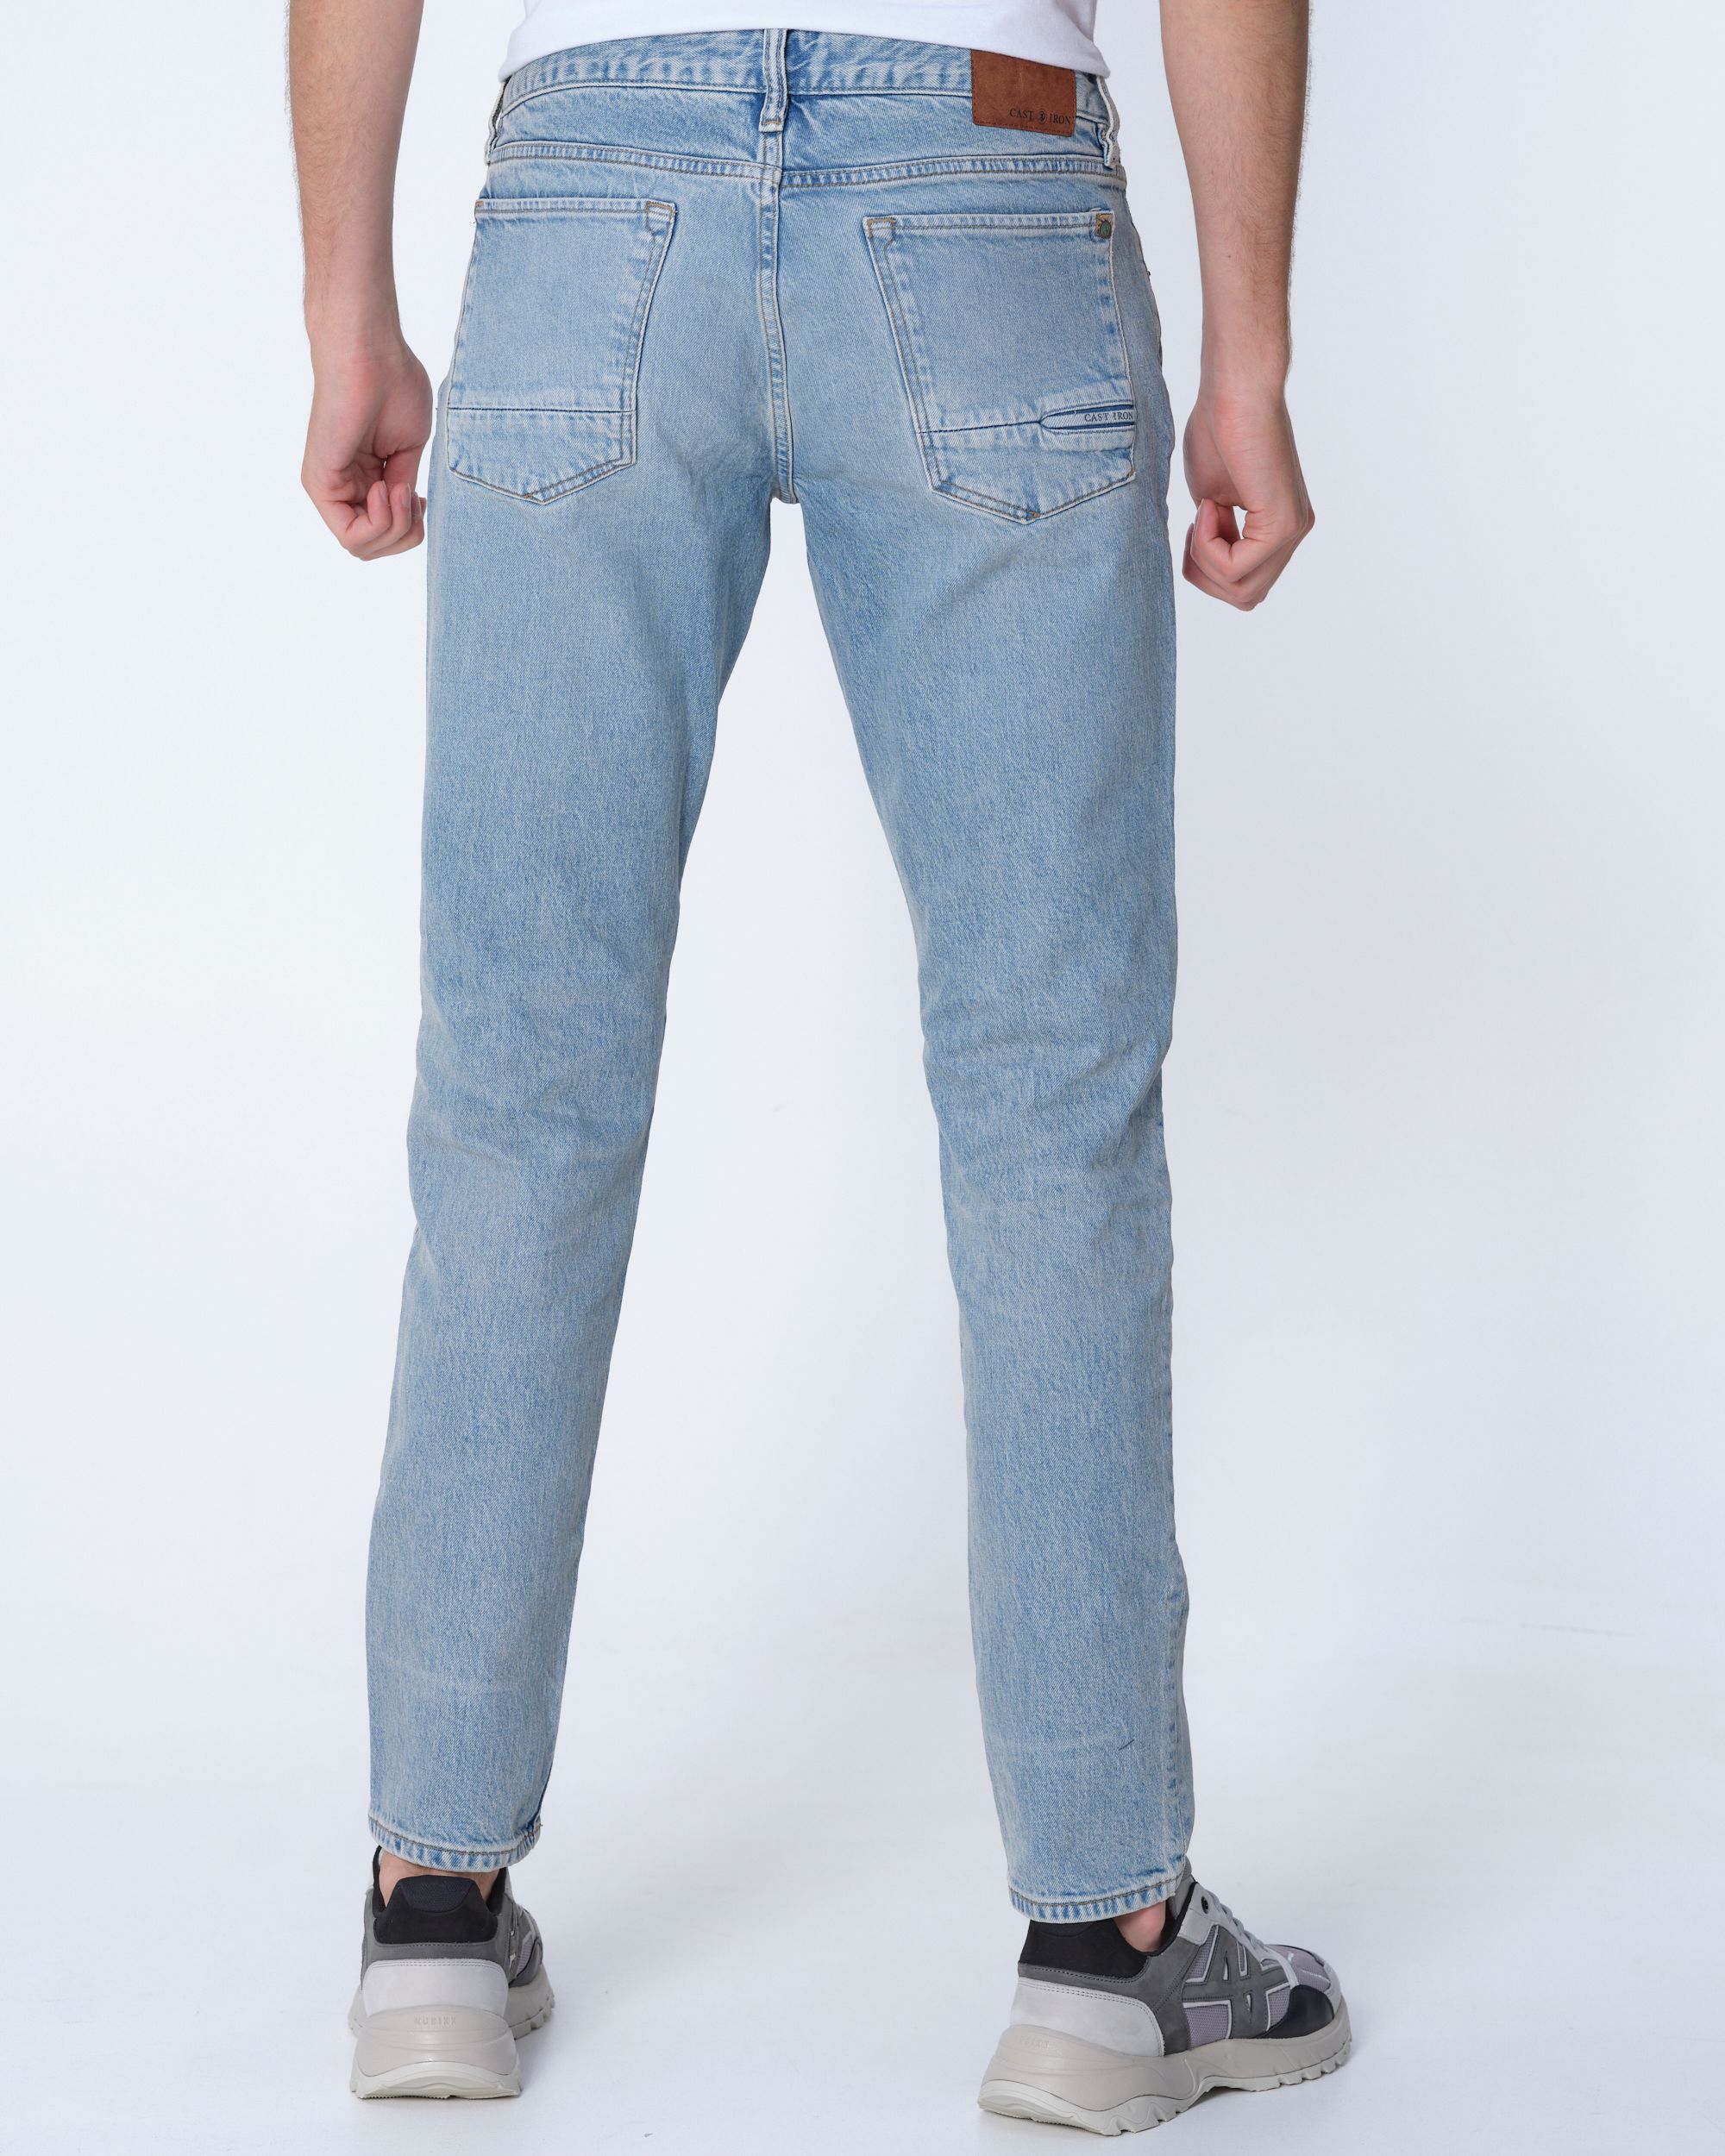 Cast Iron Riser Slim Fit Jeans Blauw 076216-001-28/30